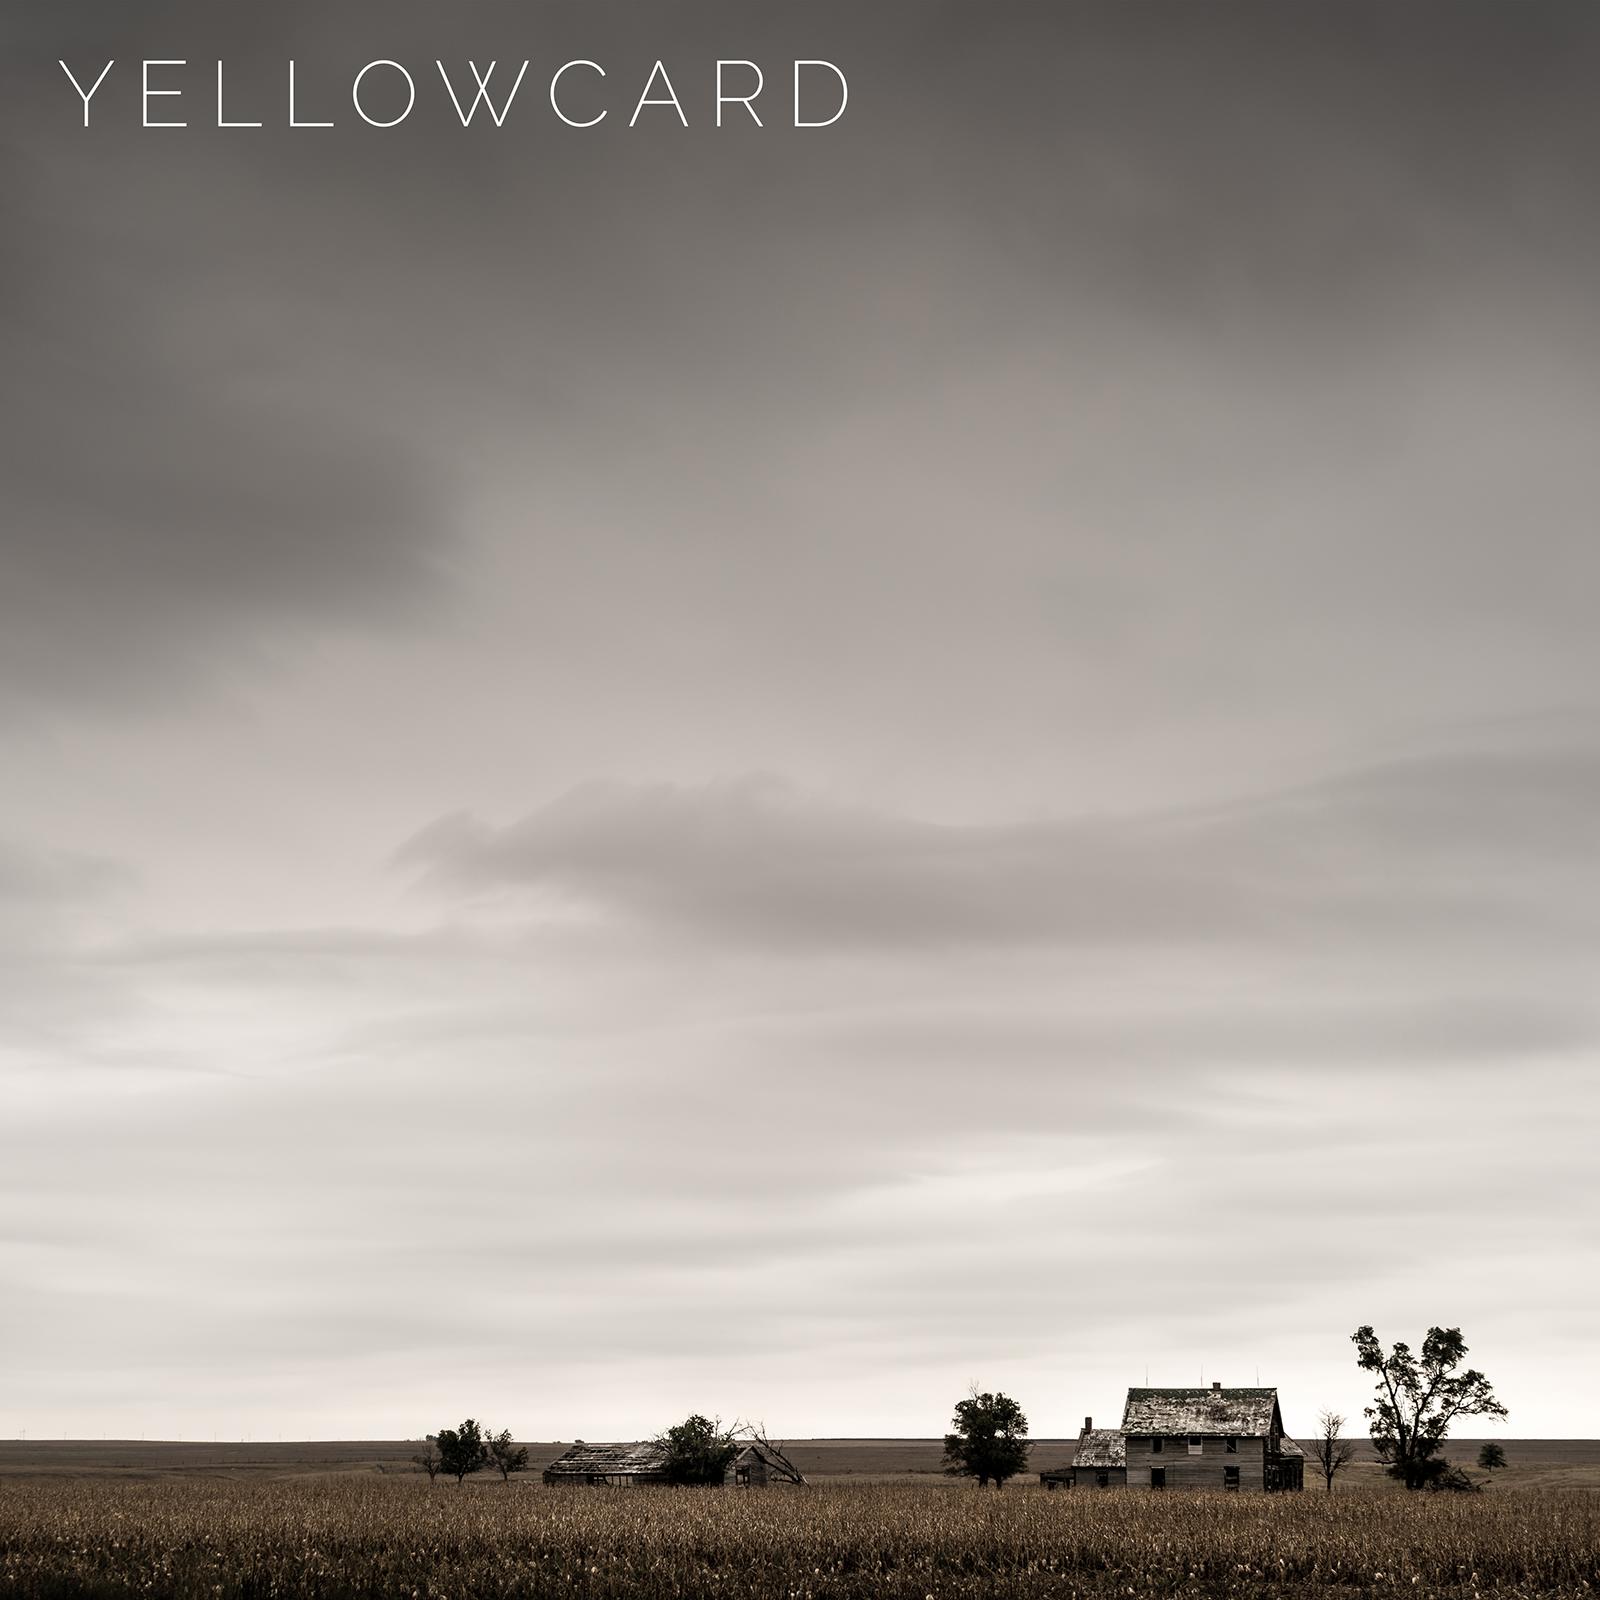 Yellowcard - Yellowcard (2016) Album Info